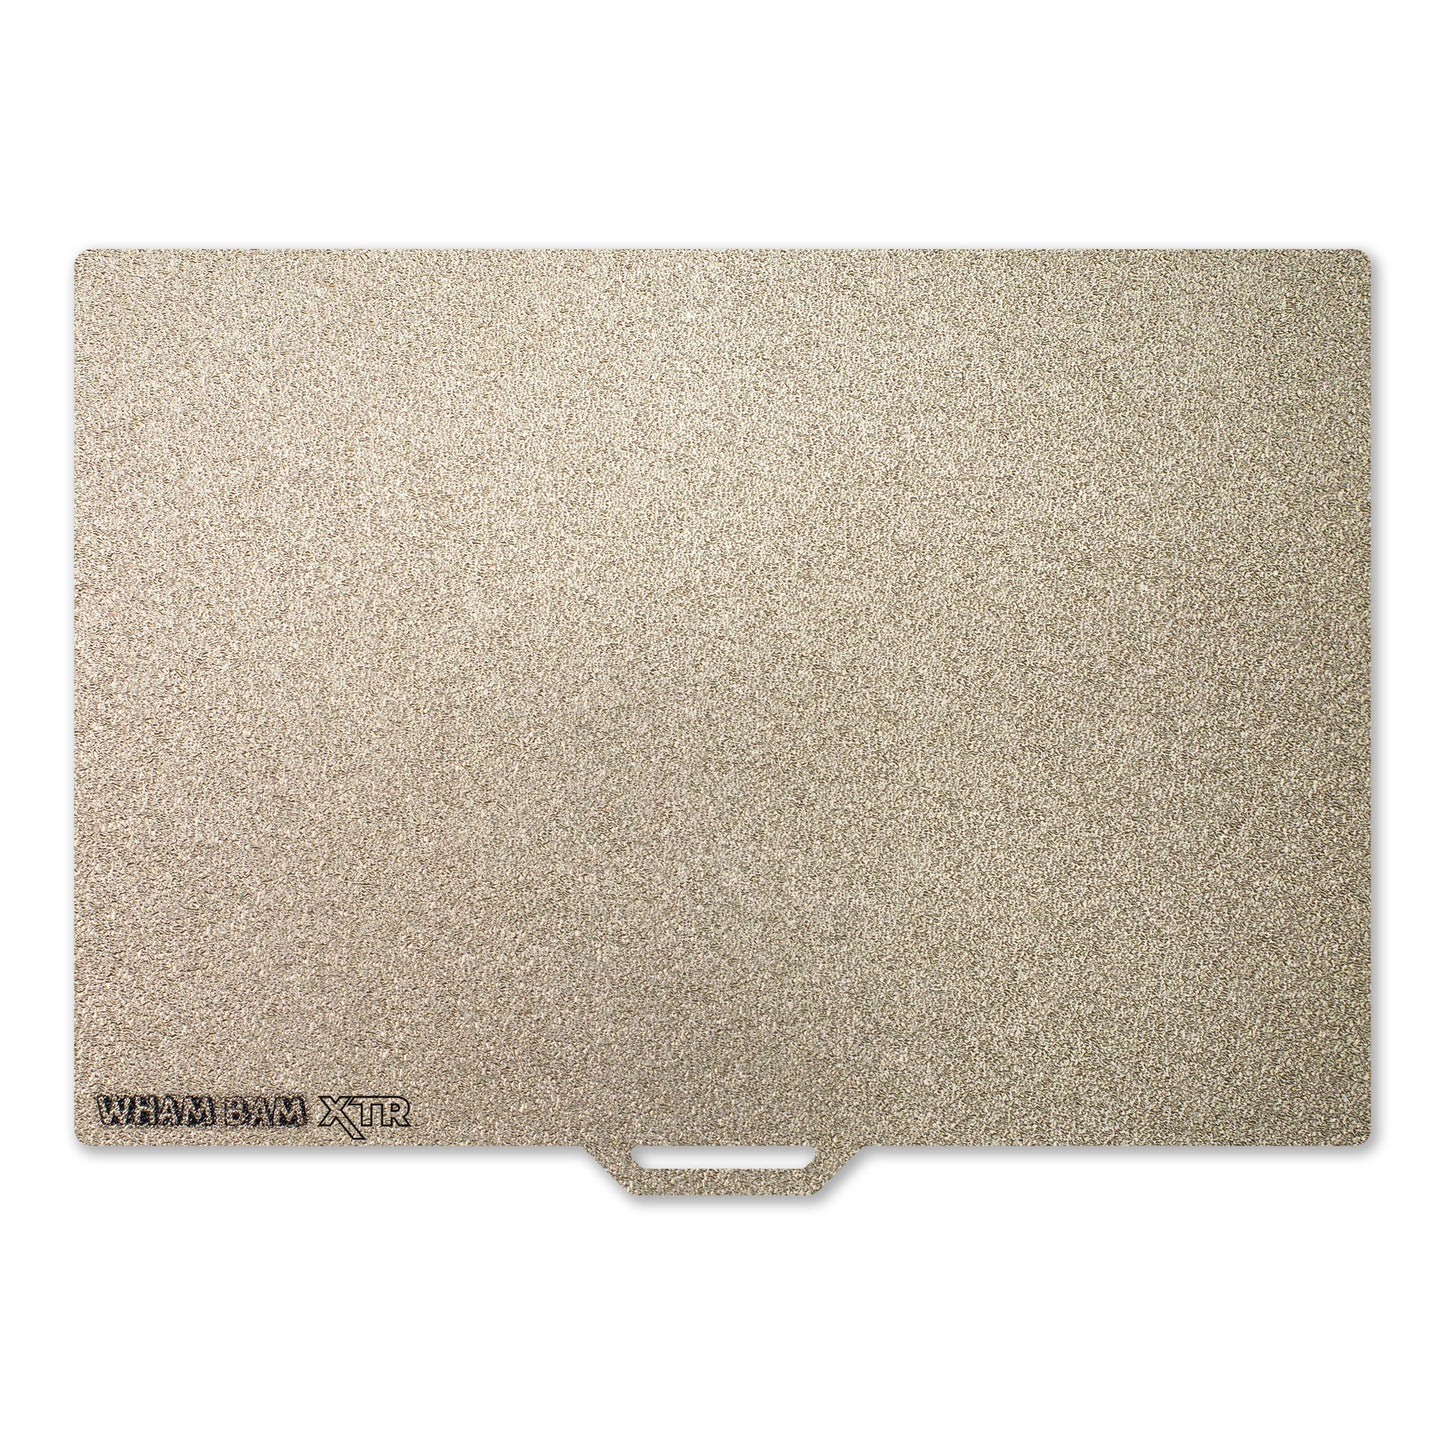 XTR Flexi Plate with Textured ULTEM PEI - Raise3D E2 - 367 x 254